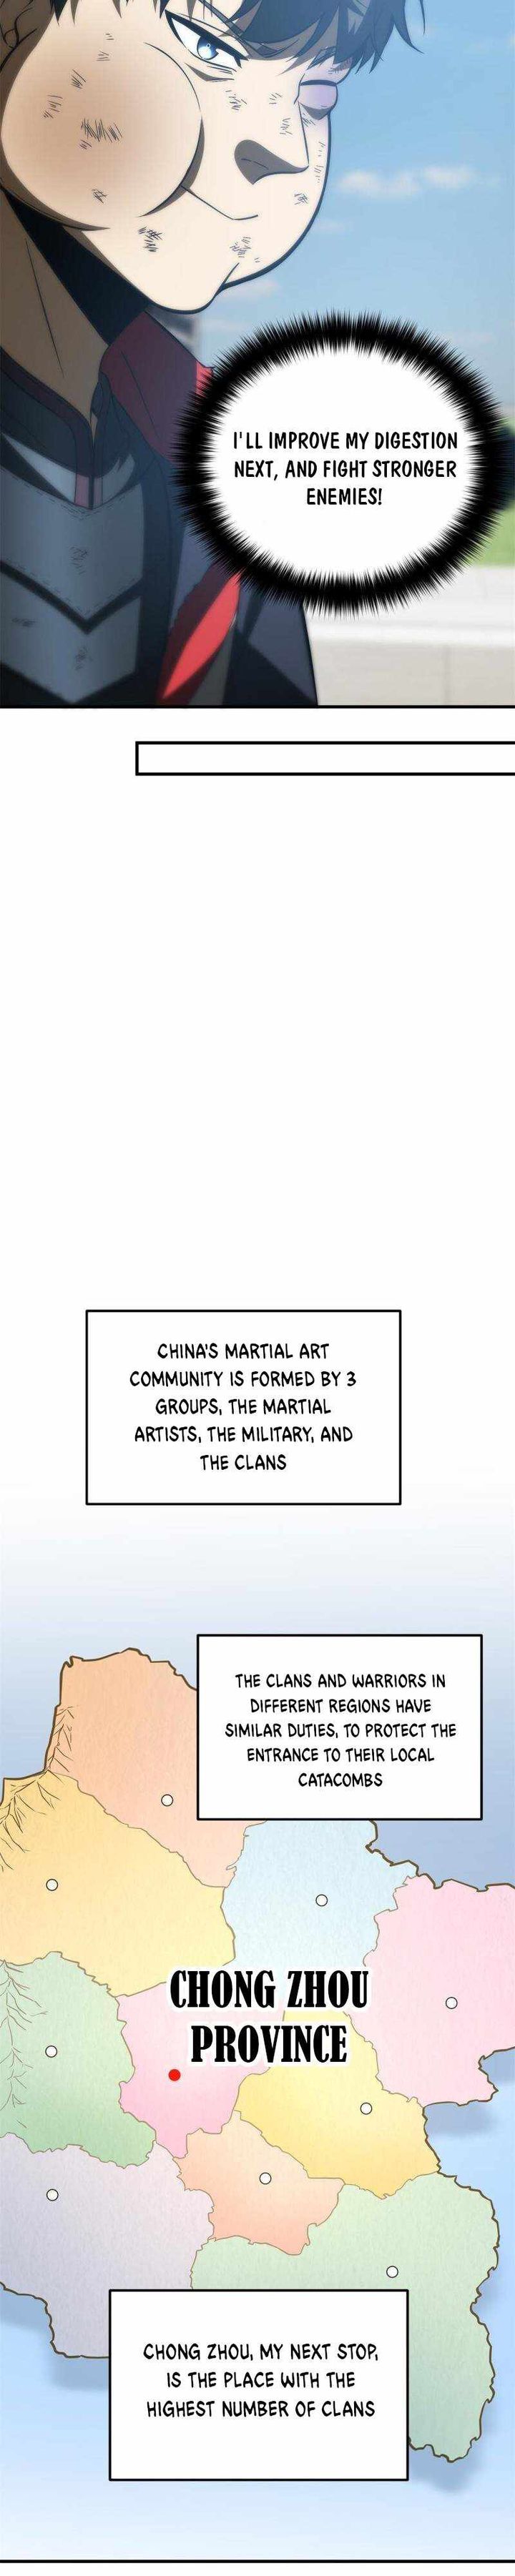 global_martial_arts_157_11